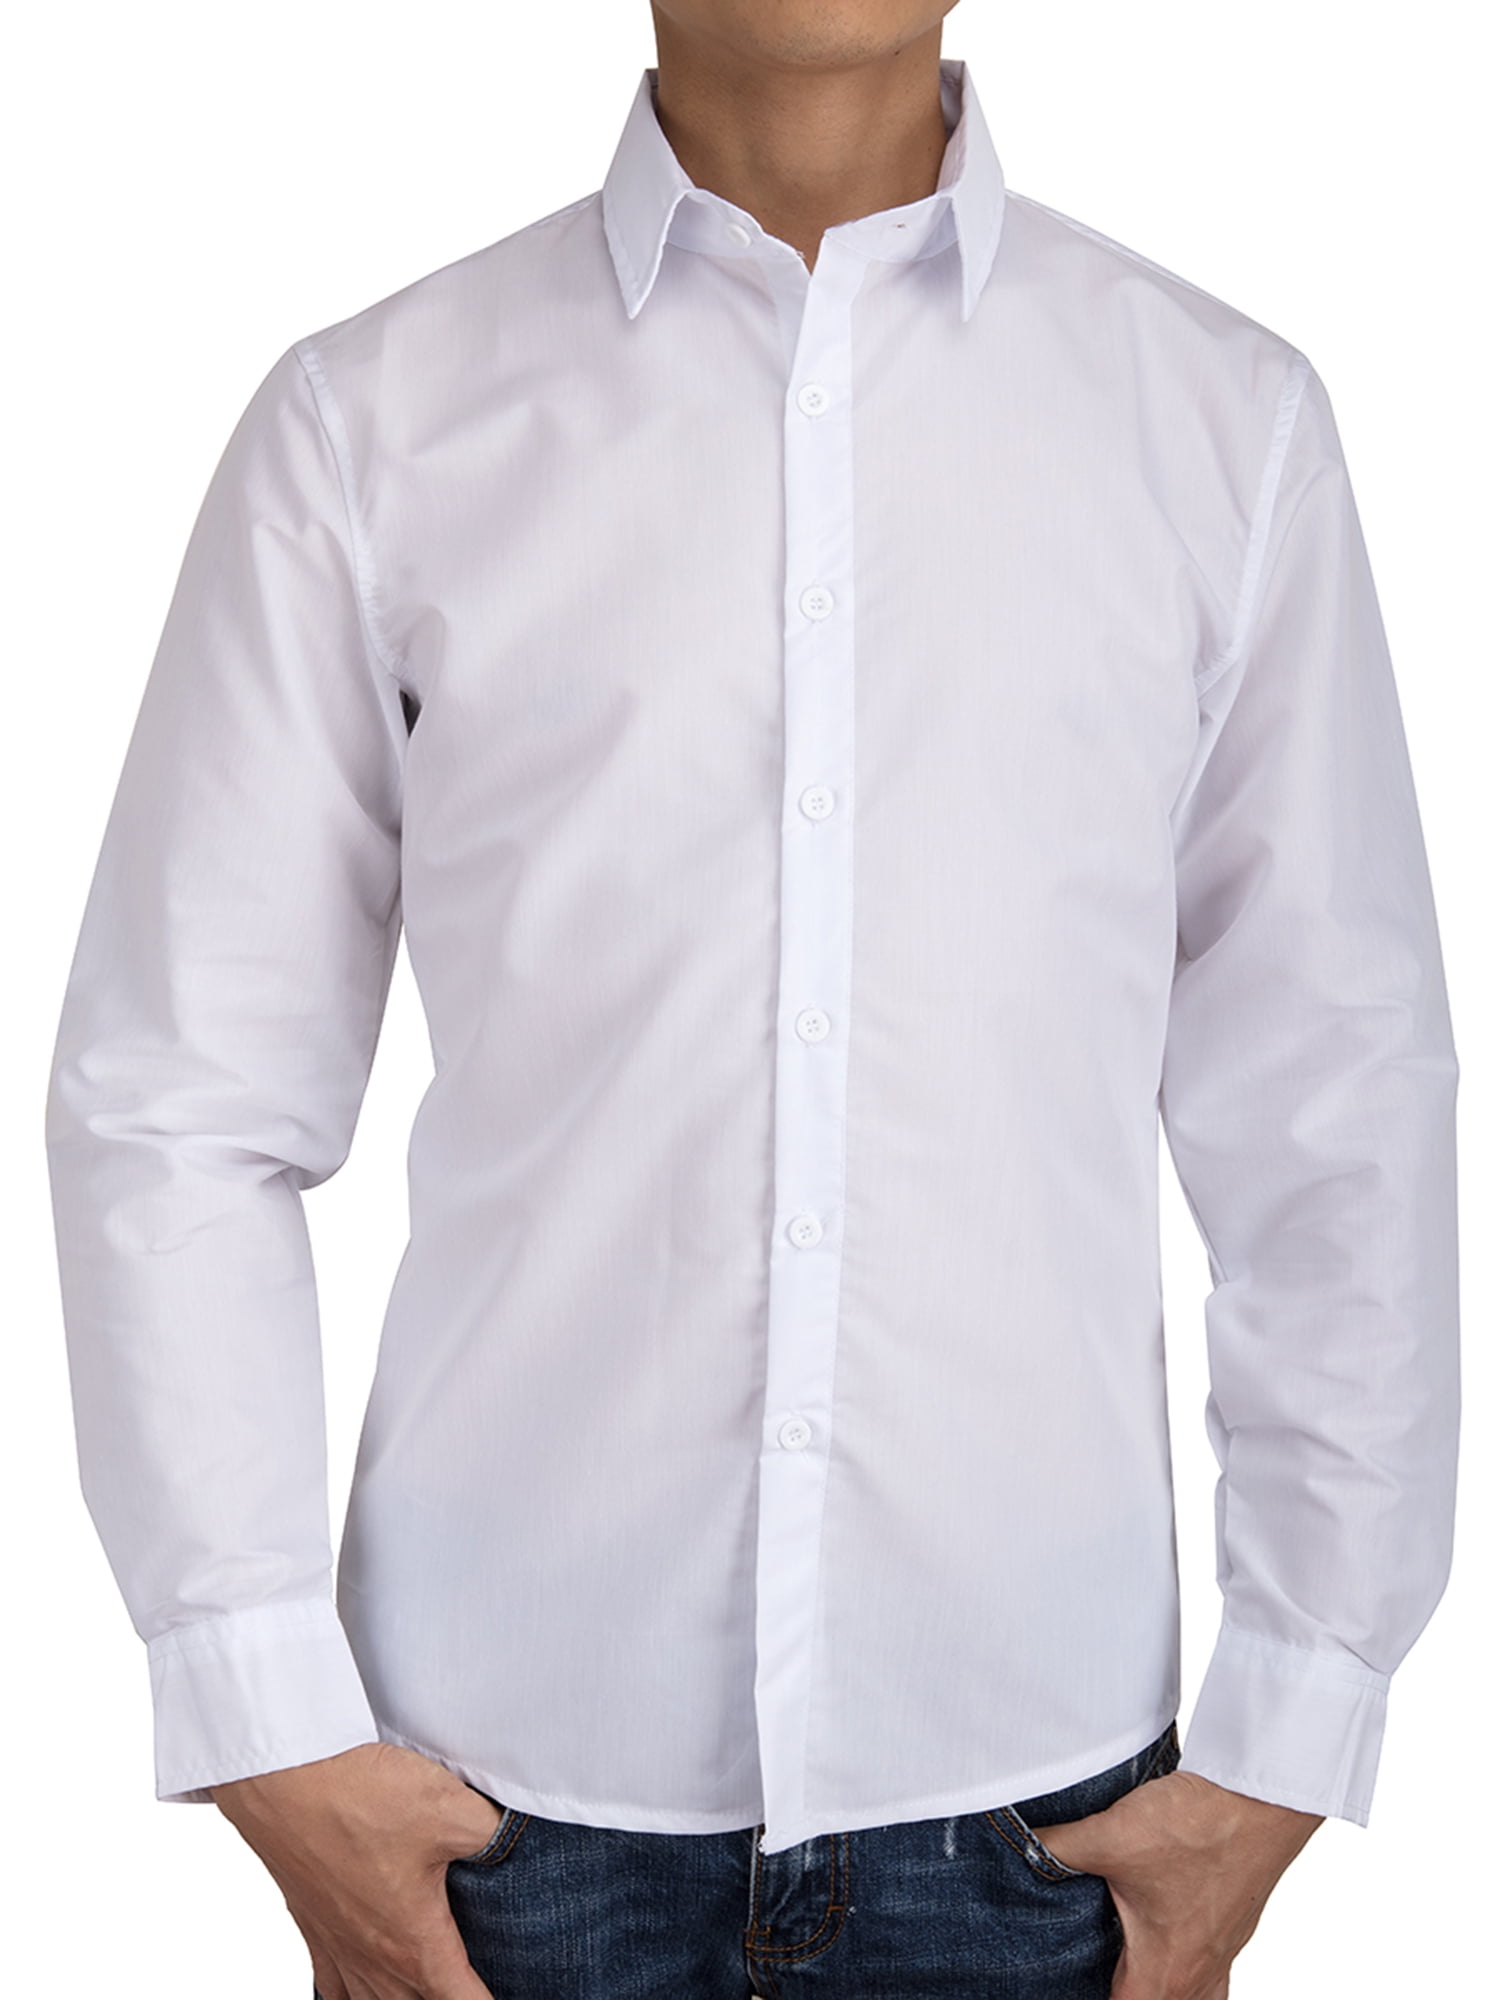 white long sleeve dress shirt walmart